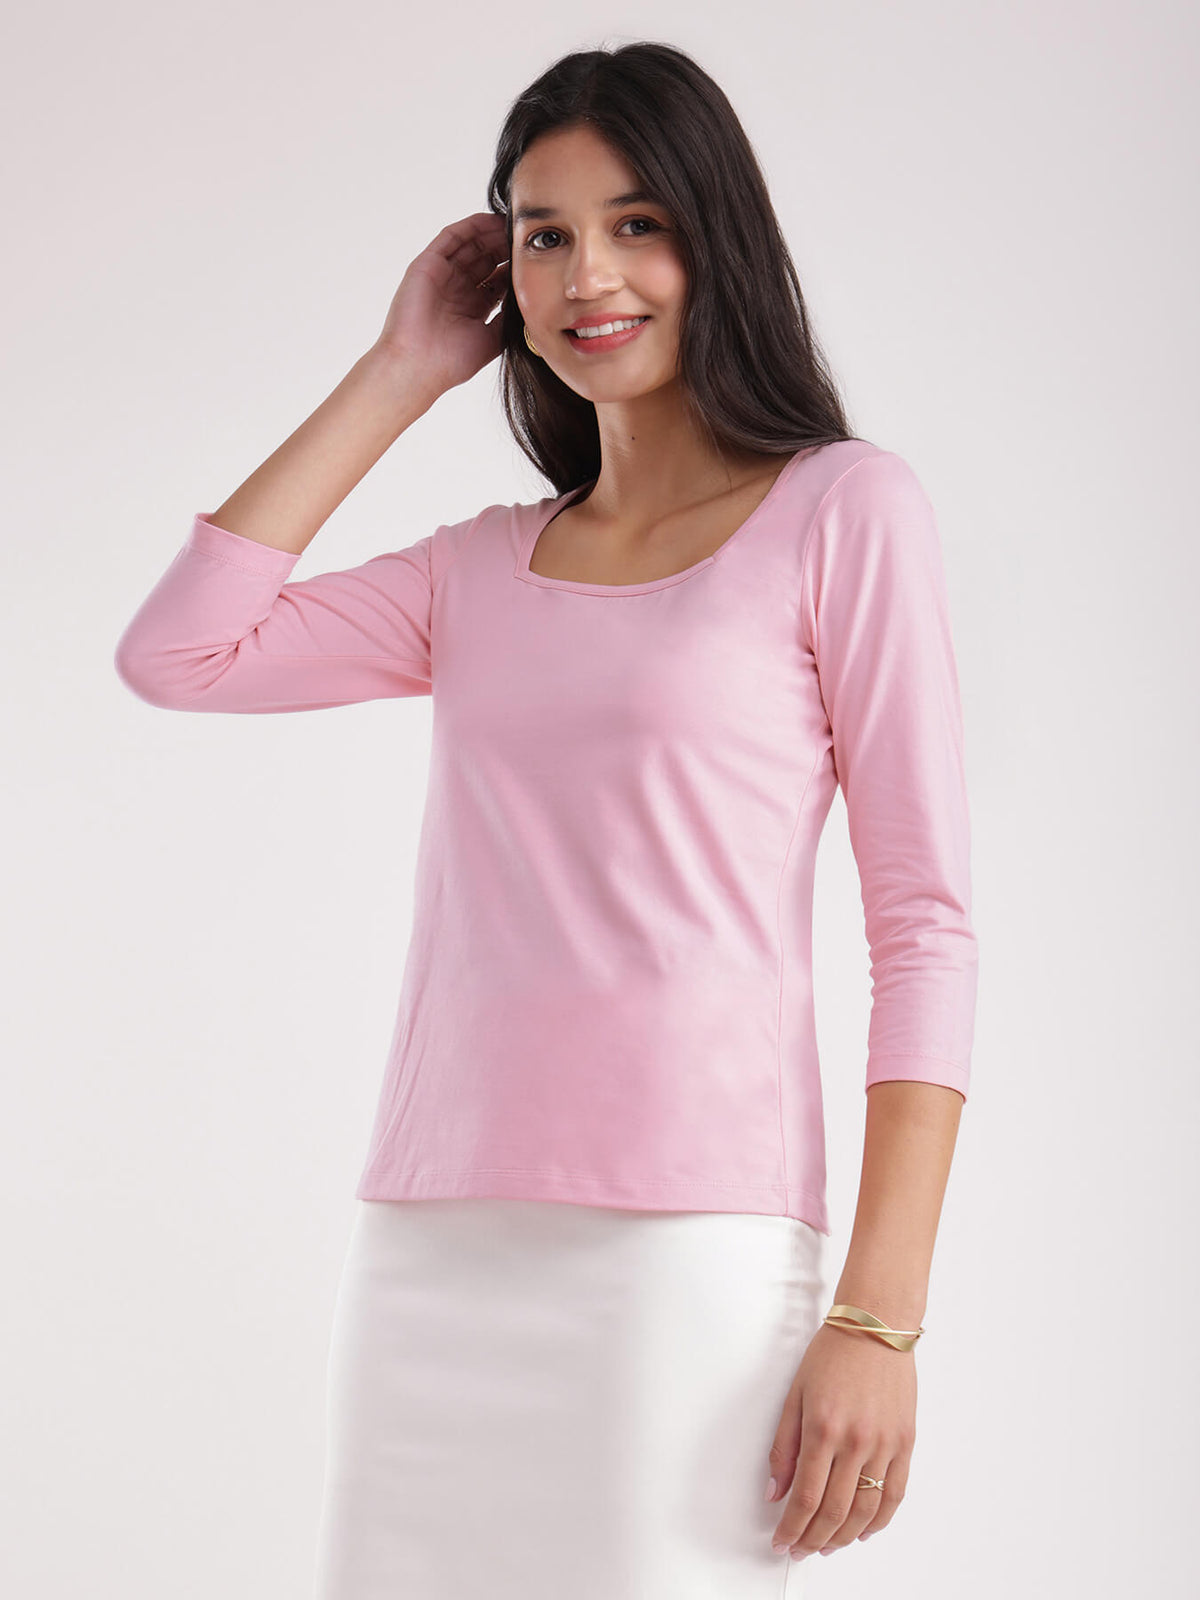 LivSoft Cotton Square Neck T-Shirt - Pink